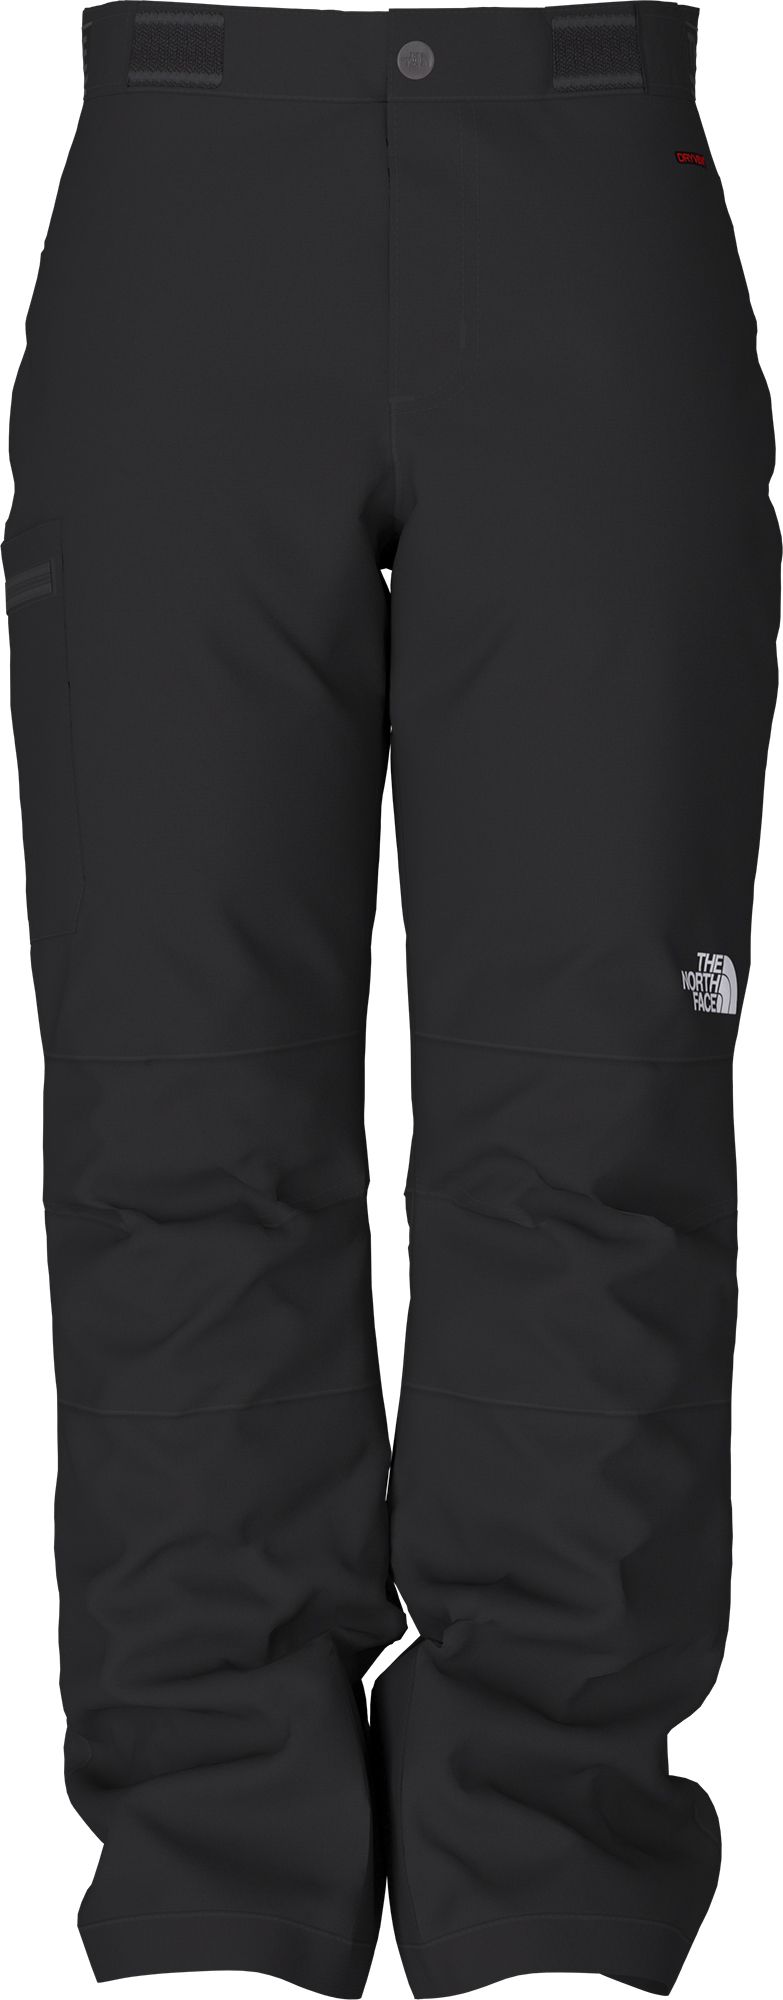 Photos - Ski Wear The North Face Girls' Freedom Insulated Snow Pants, Medium, TNF Black 22TN 